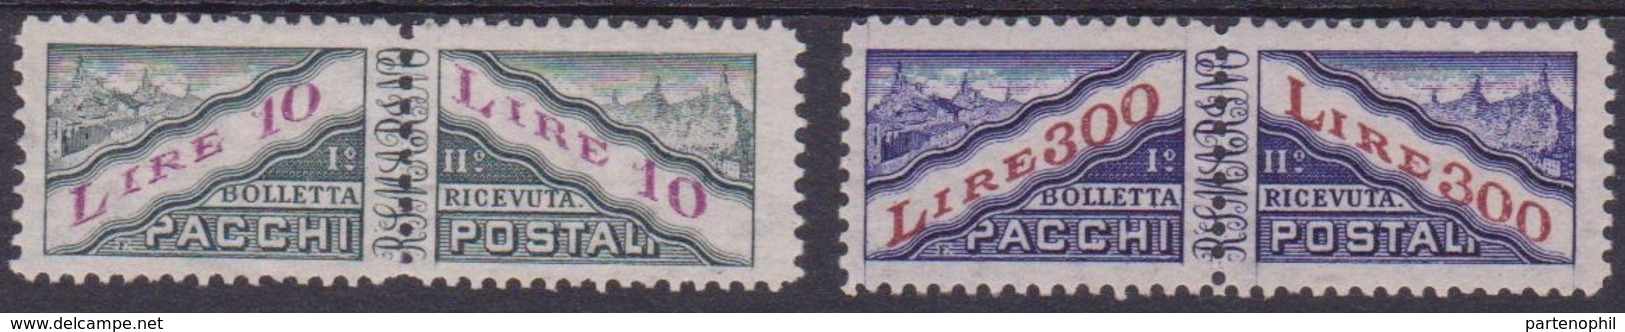 San Marino 1953 - Pacchi Postali N.35/35 Lire 10 + Lire 300 MNH - Cert. Bolaffi - Parcel Post Stamps